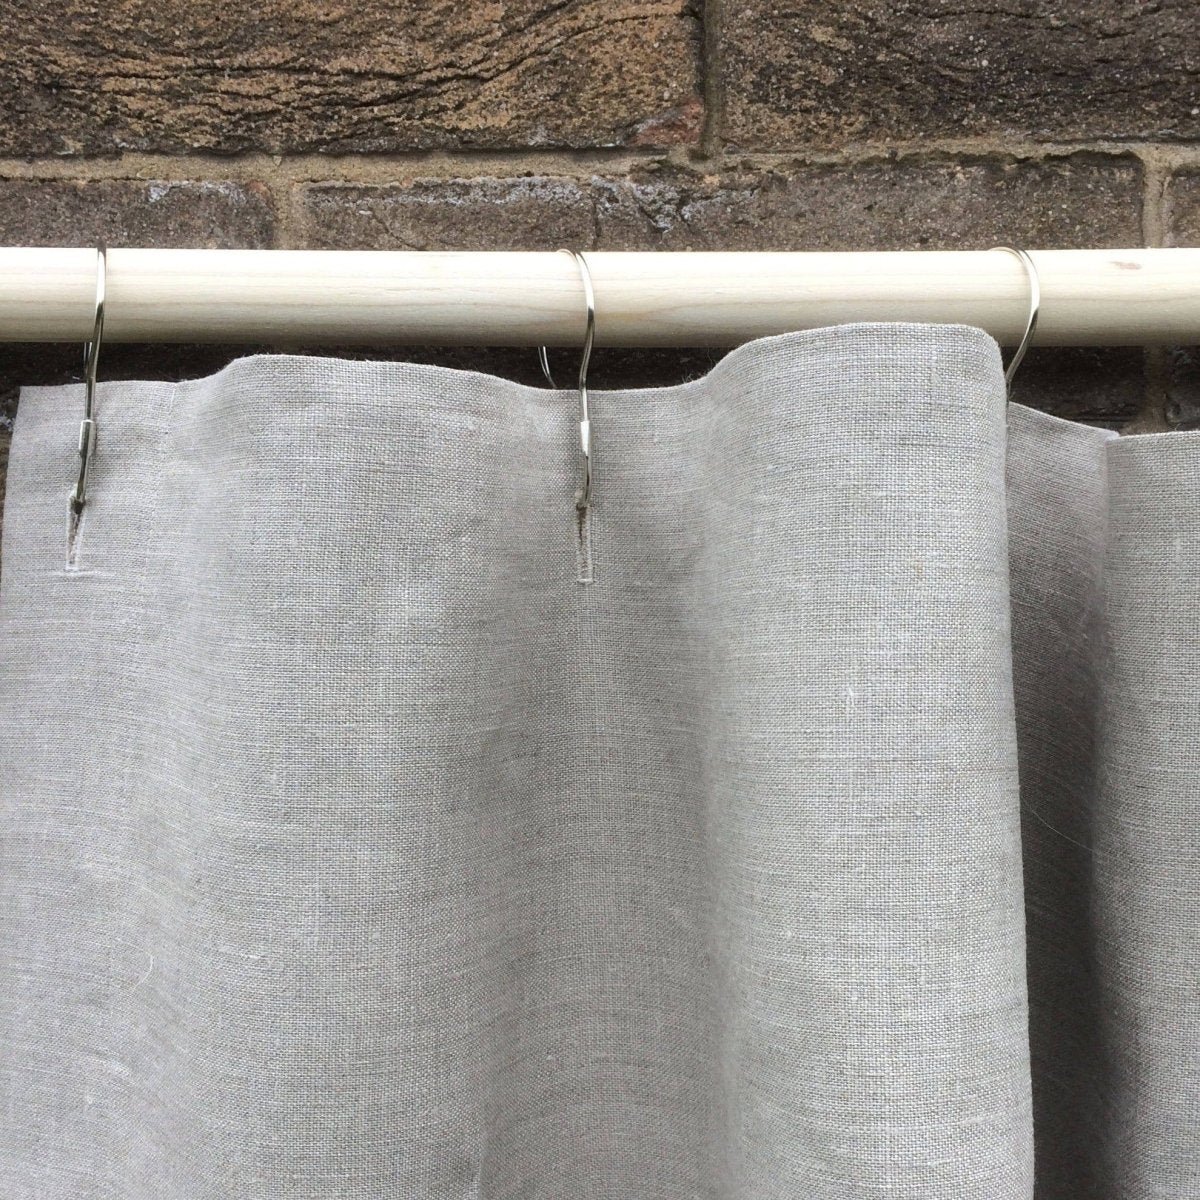 Monogram Natural Linen Lace Shower Curtain - Linen and Letters